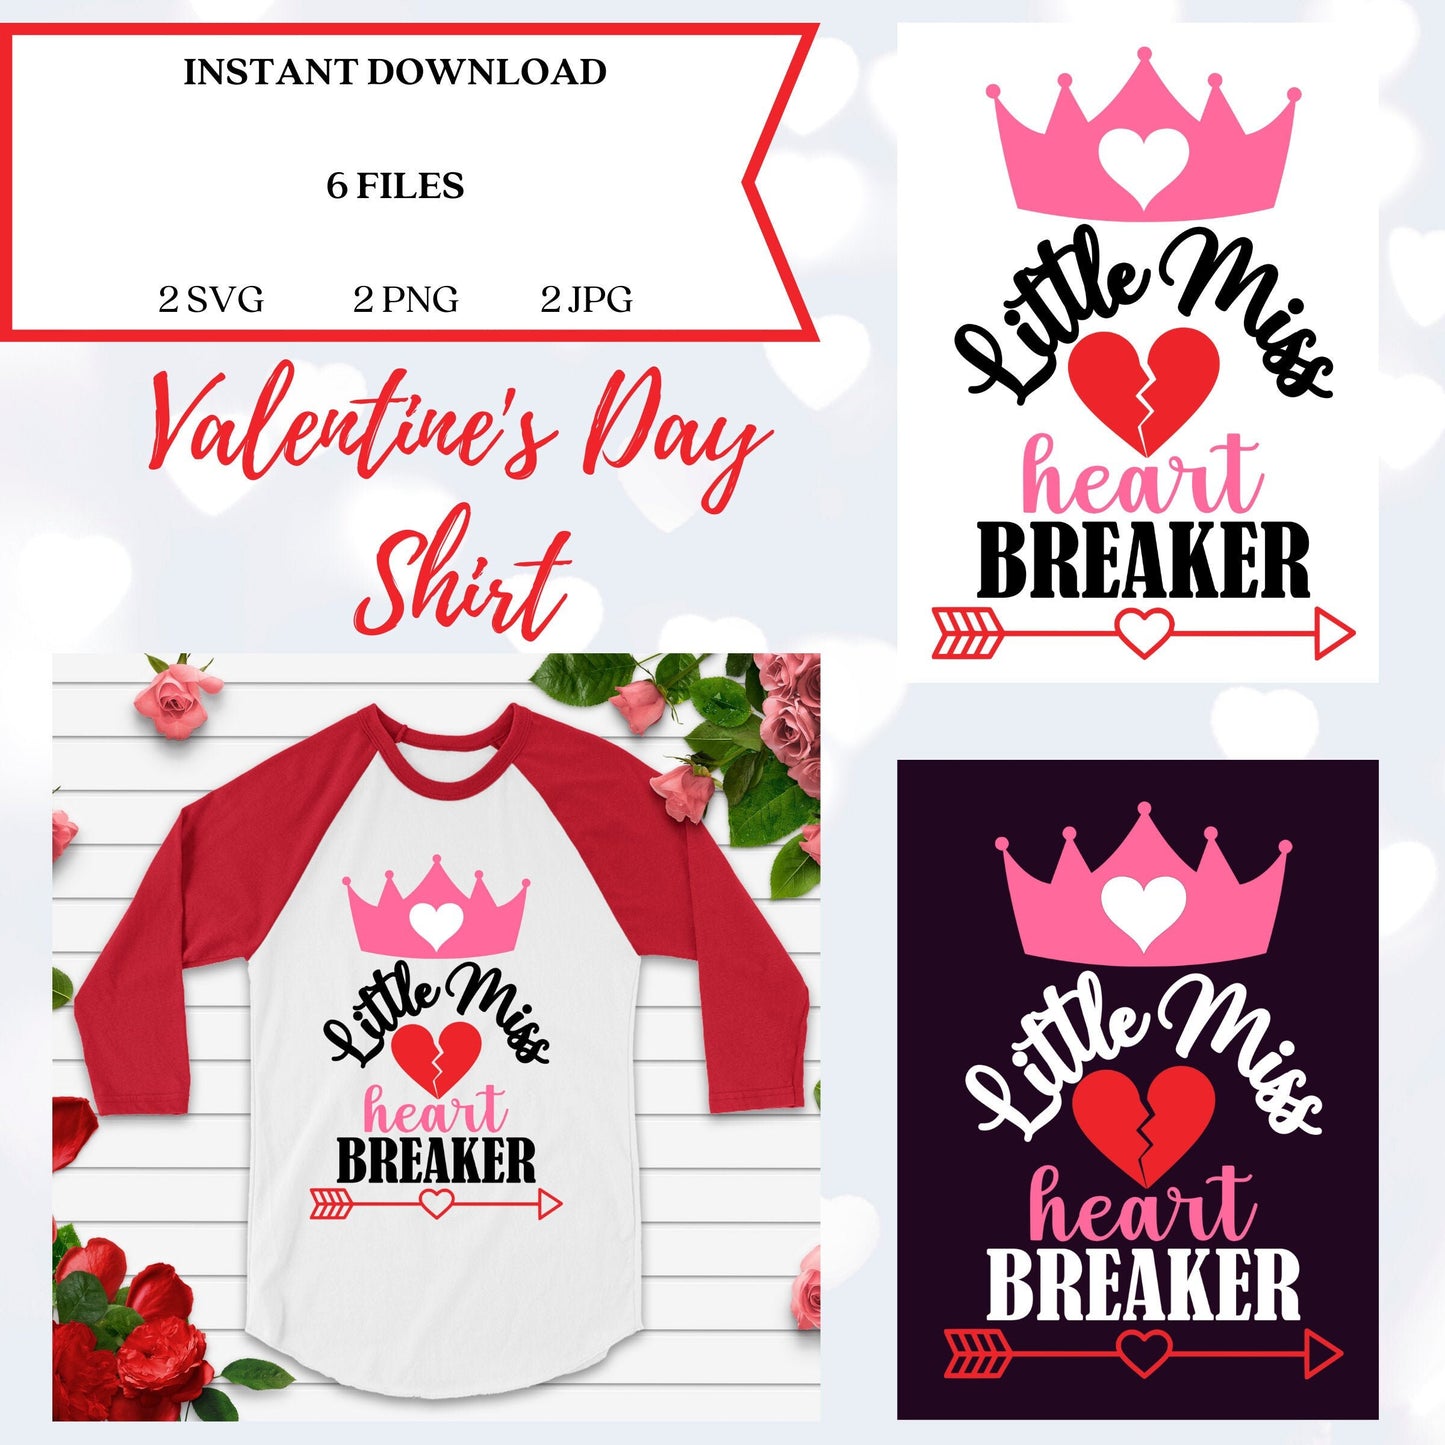 Little Miss Heart Breaker SVG for Cricut and Silhouette, Valentine's SVG, HeartBreaker SVG - SthrngurlCreations